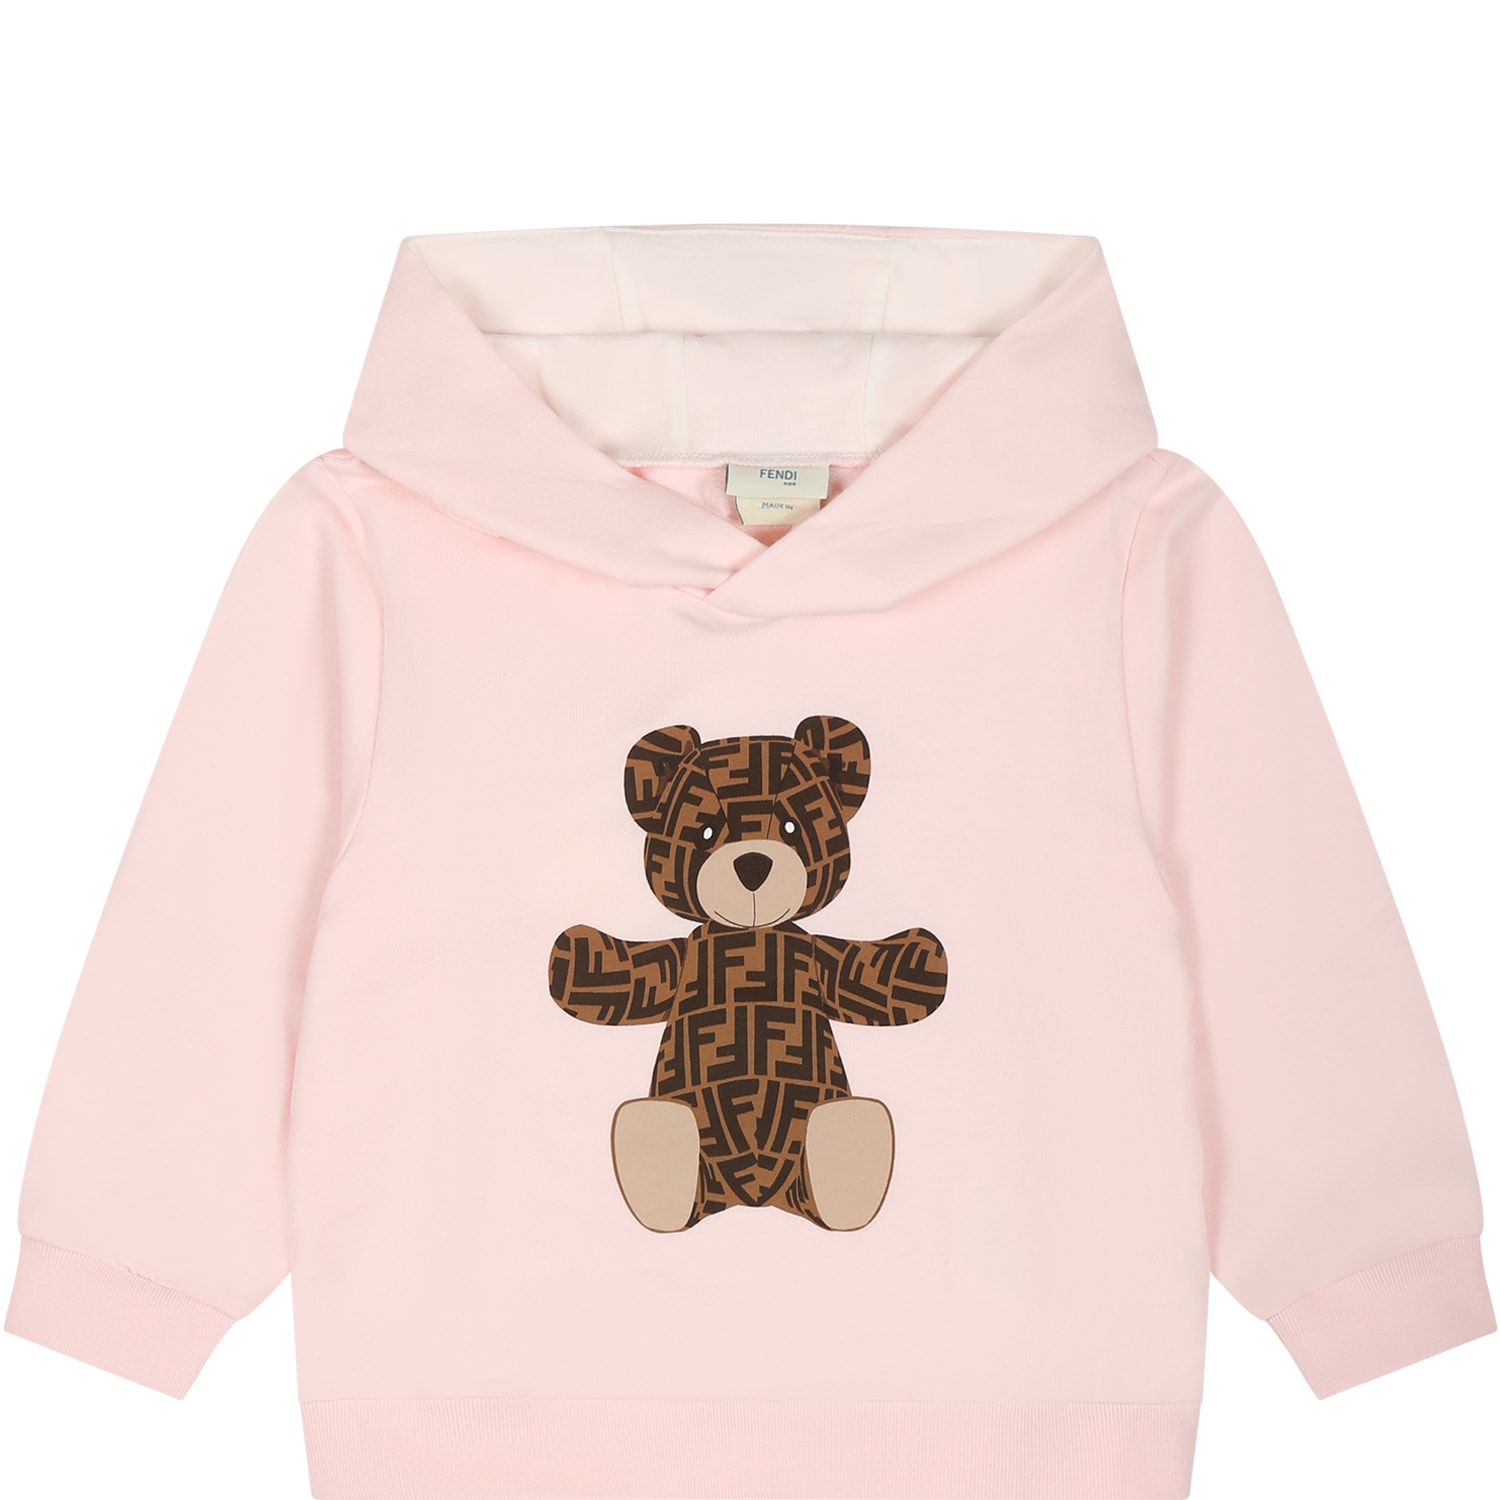 Fendi Baby Girl's Neoprene Logo Bow Dress - Brown Pink - Size 6 Months